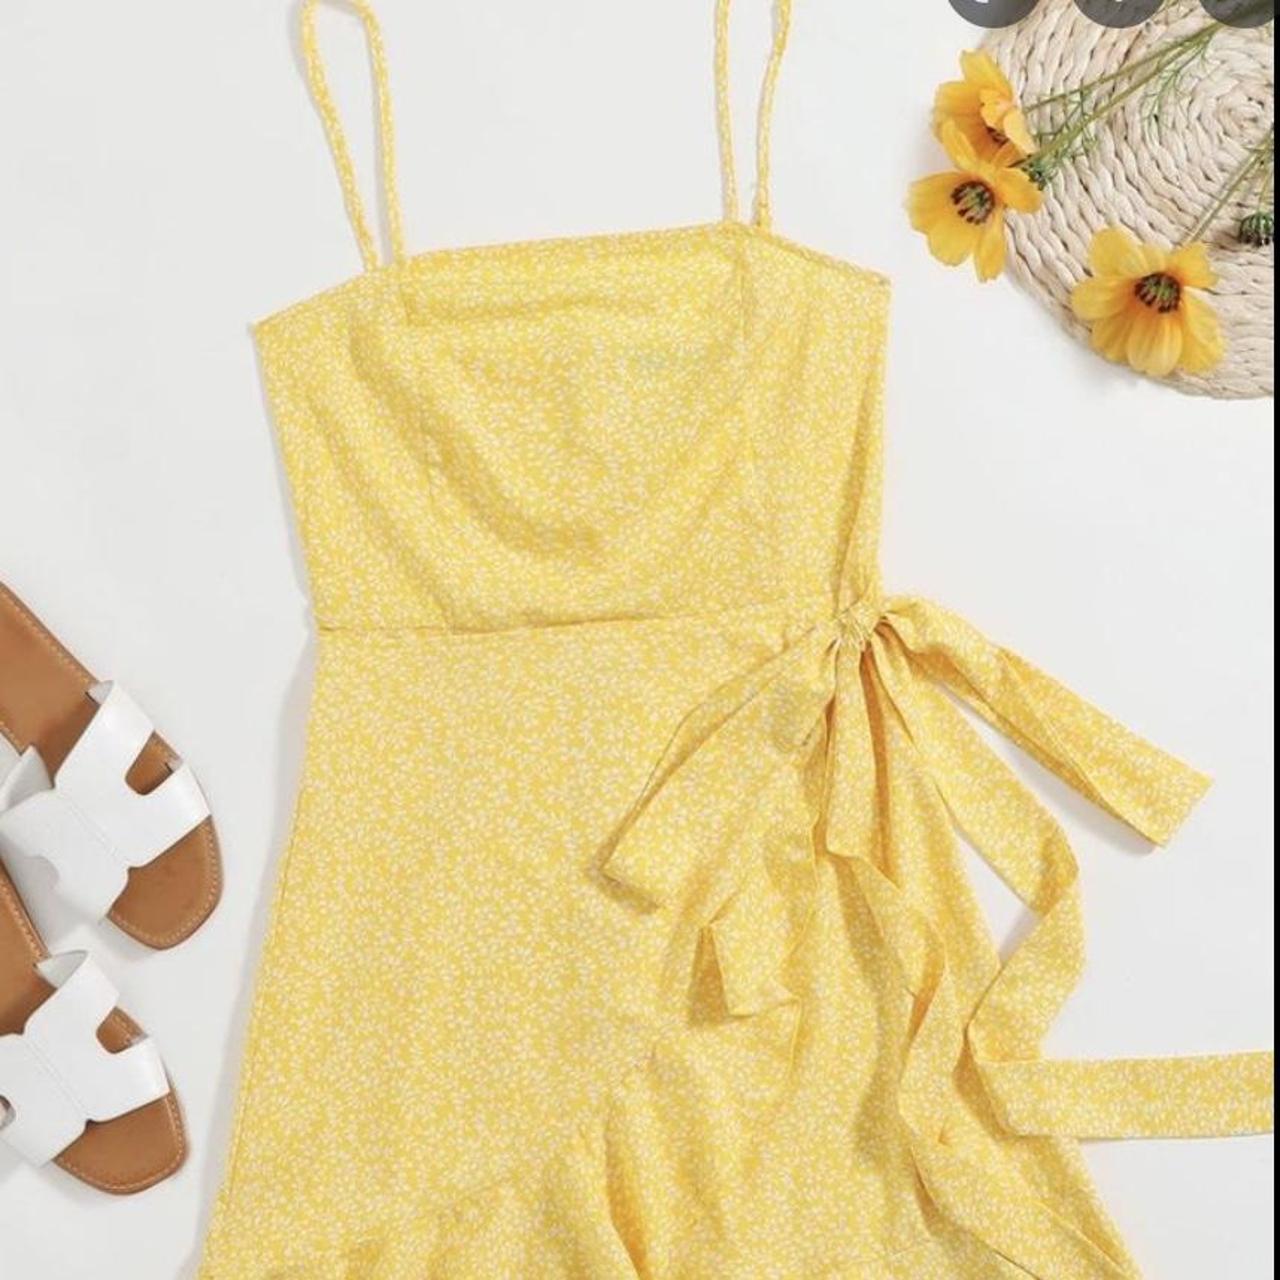 SHEIN Women's Yellow and White Dress | Depop